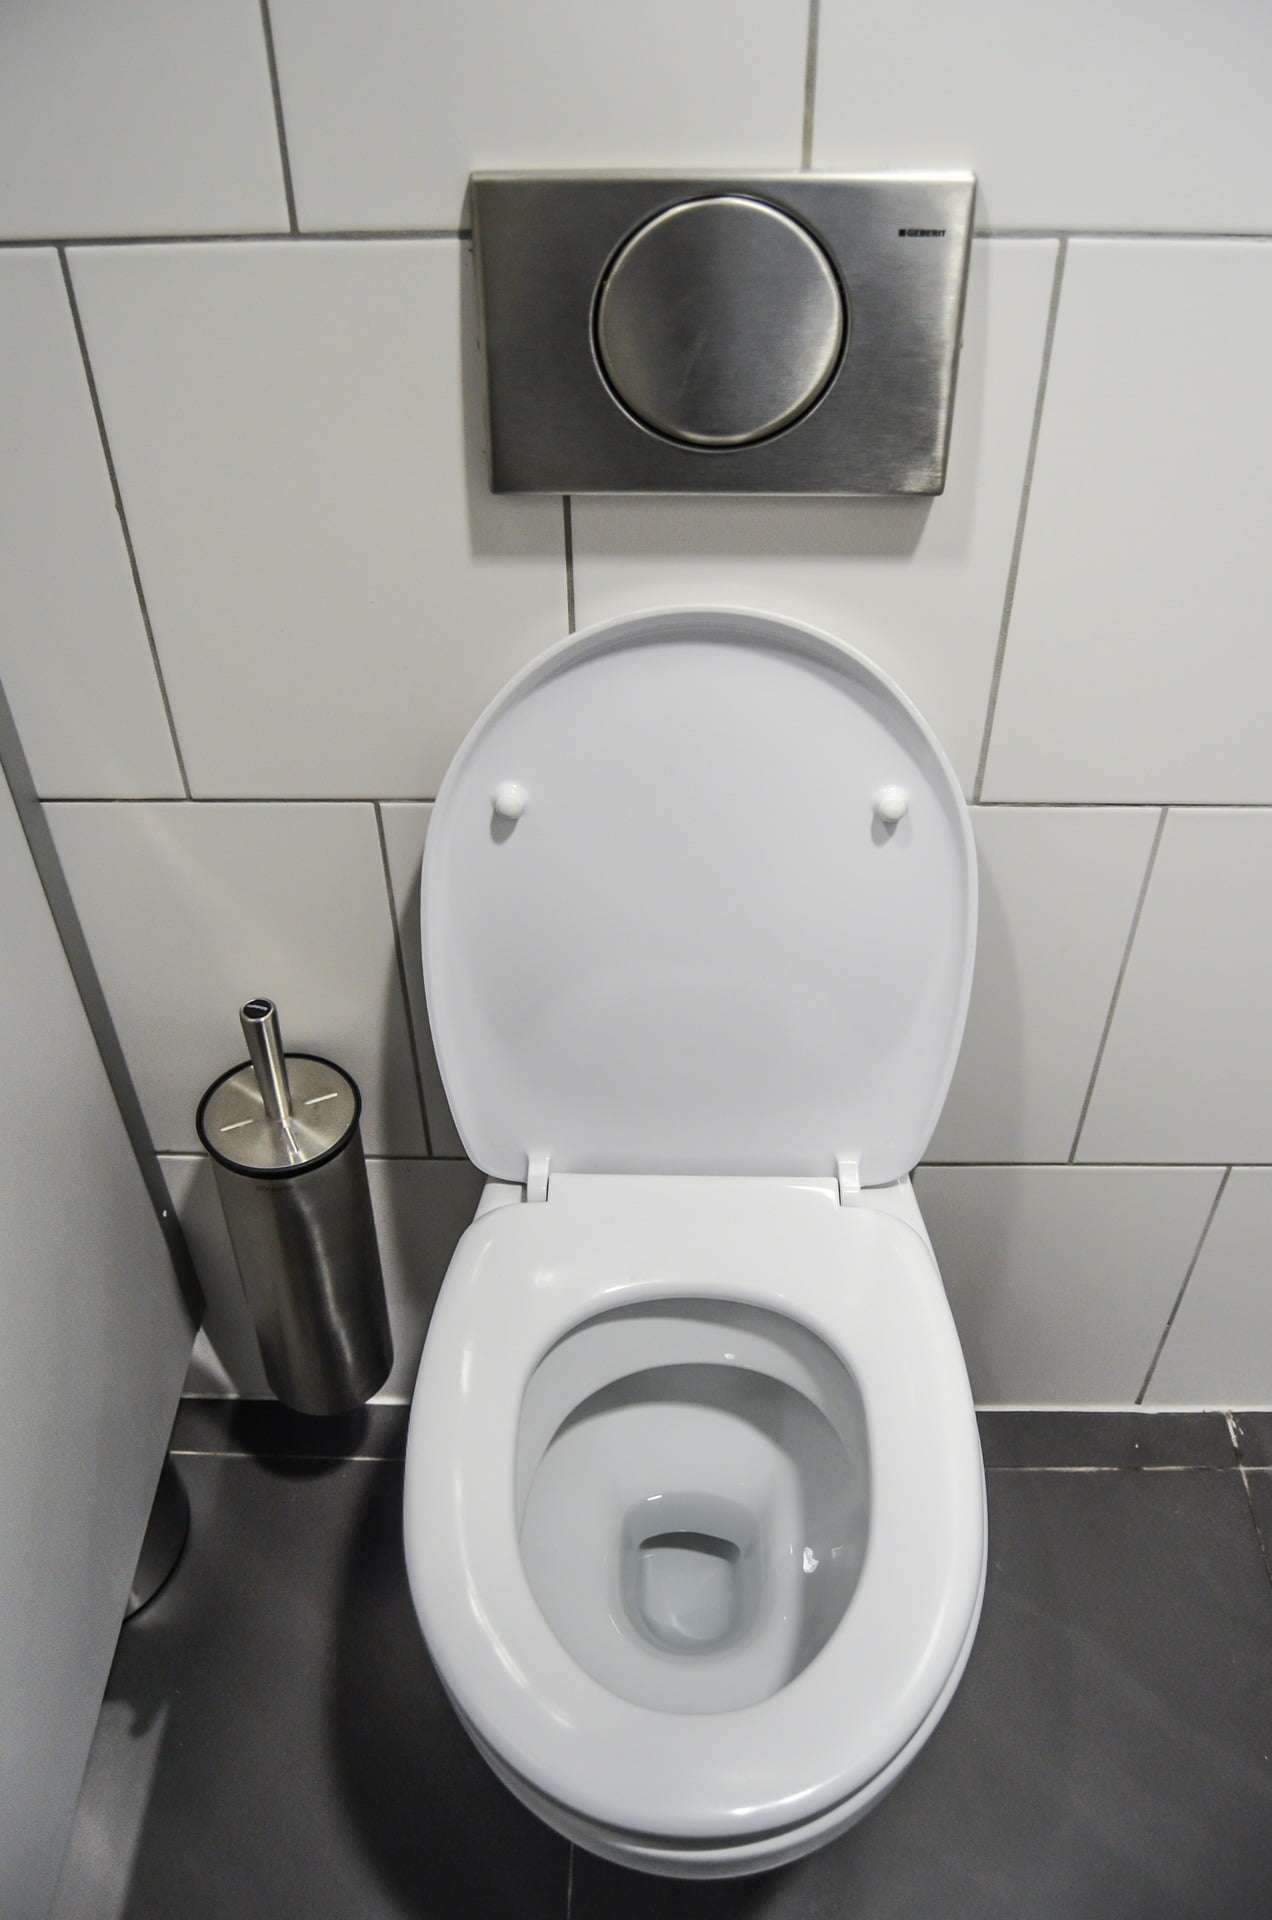 WC Abflussrohr verlegen